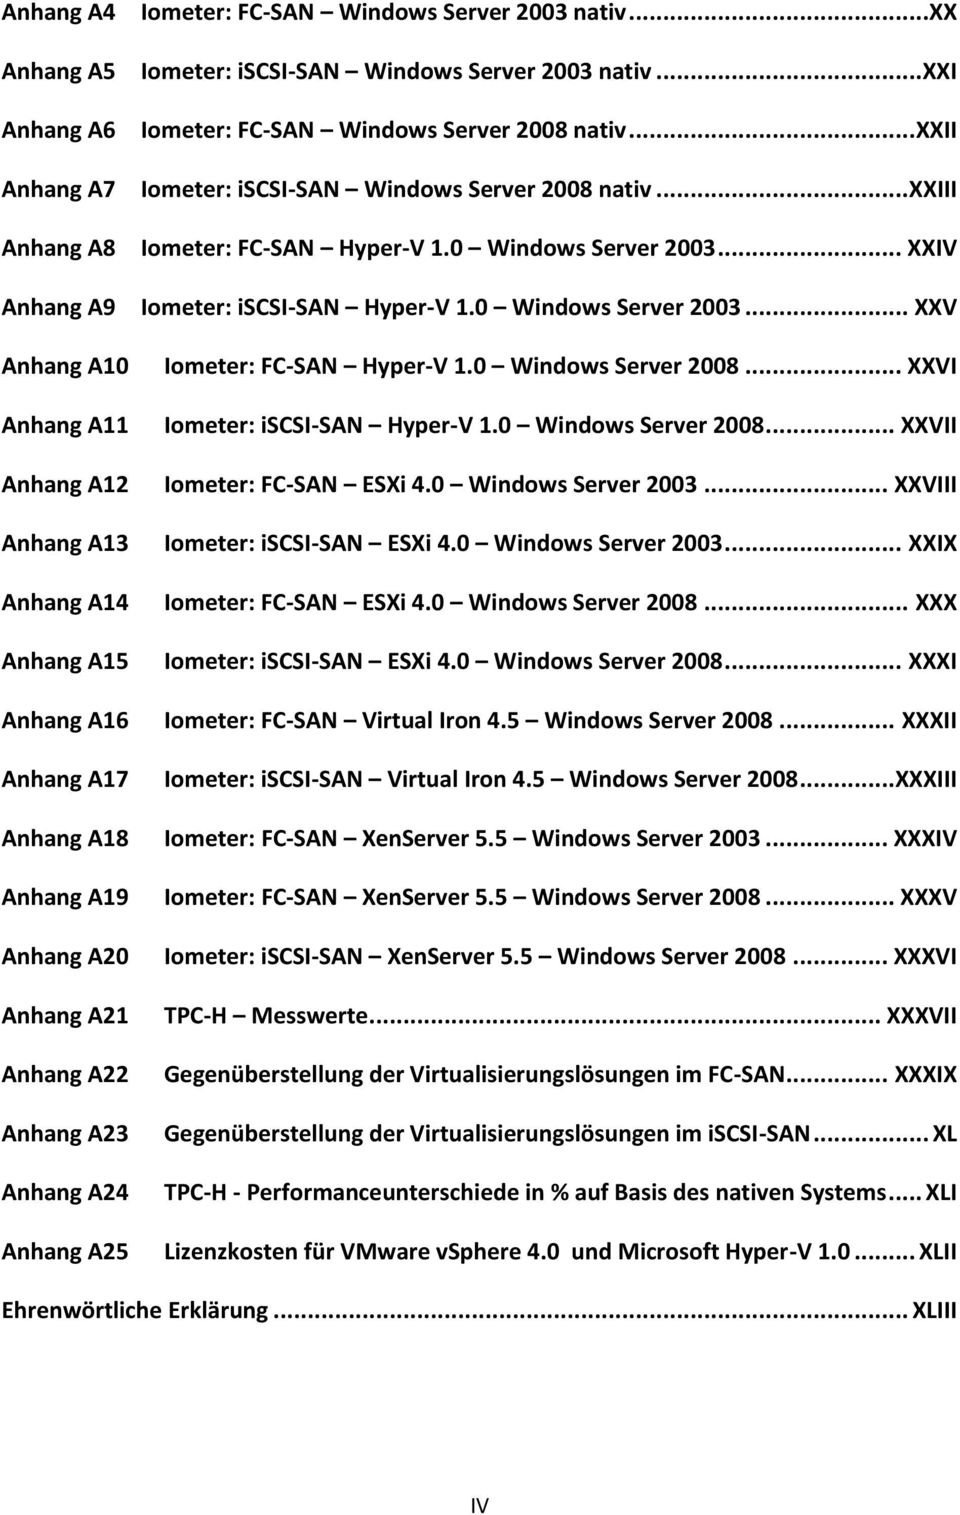 .. XXII Iometer: iscsi-san Windows Server 2008 nativ... XXIII Iometer: FC-SAN Hyper-V 1.0 Windows Server 2003... XXIV Iometer: iscsi-san Hyper-V 1.0 Windows Server 2003... XXV Iometer: FC-SAN Hyper-V 1.